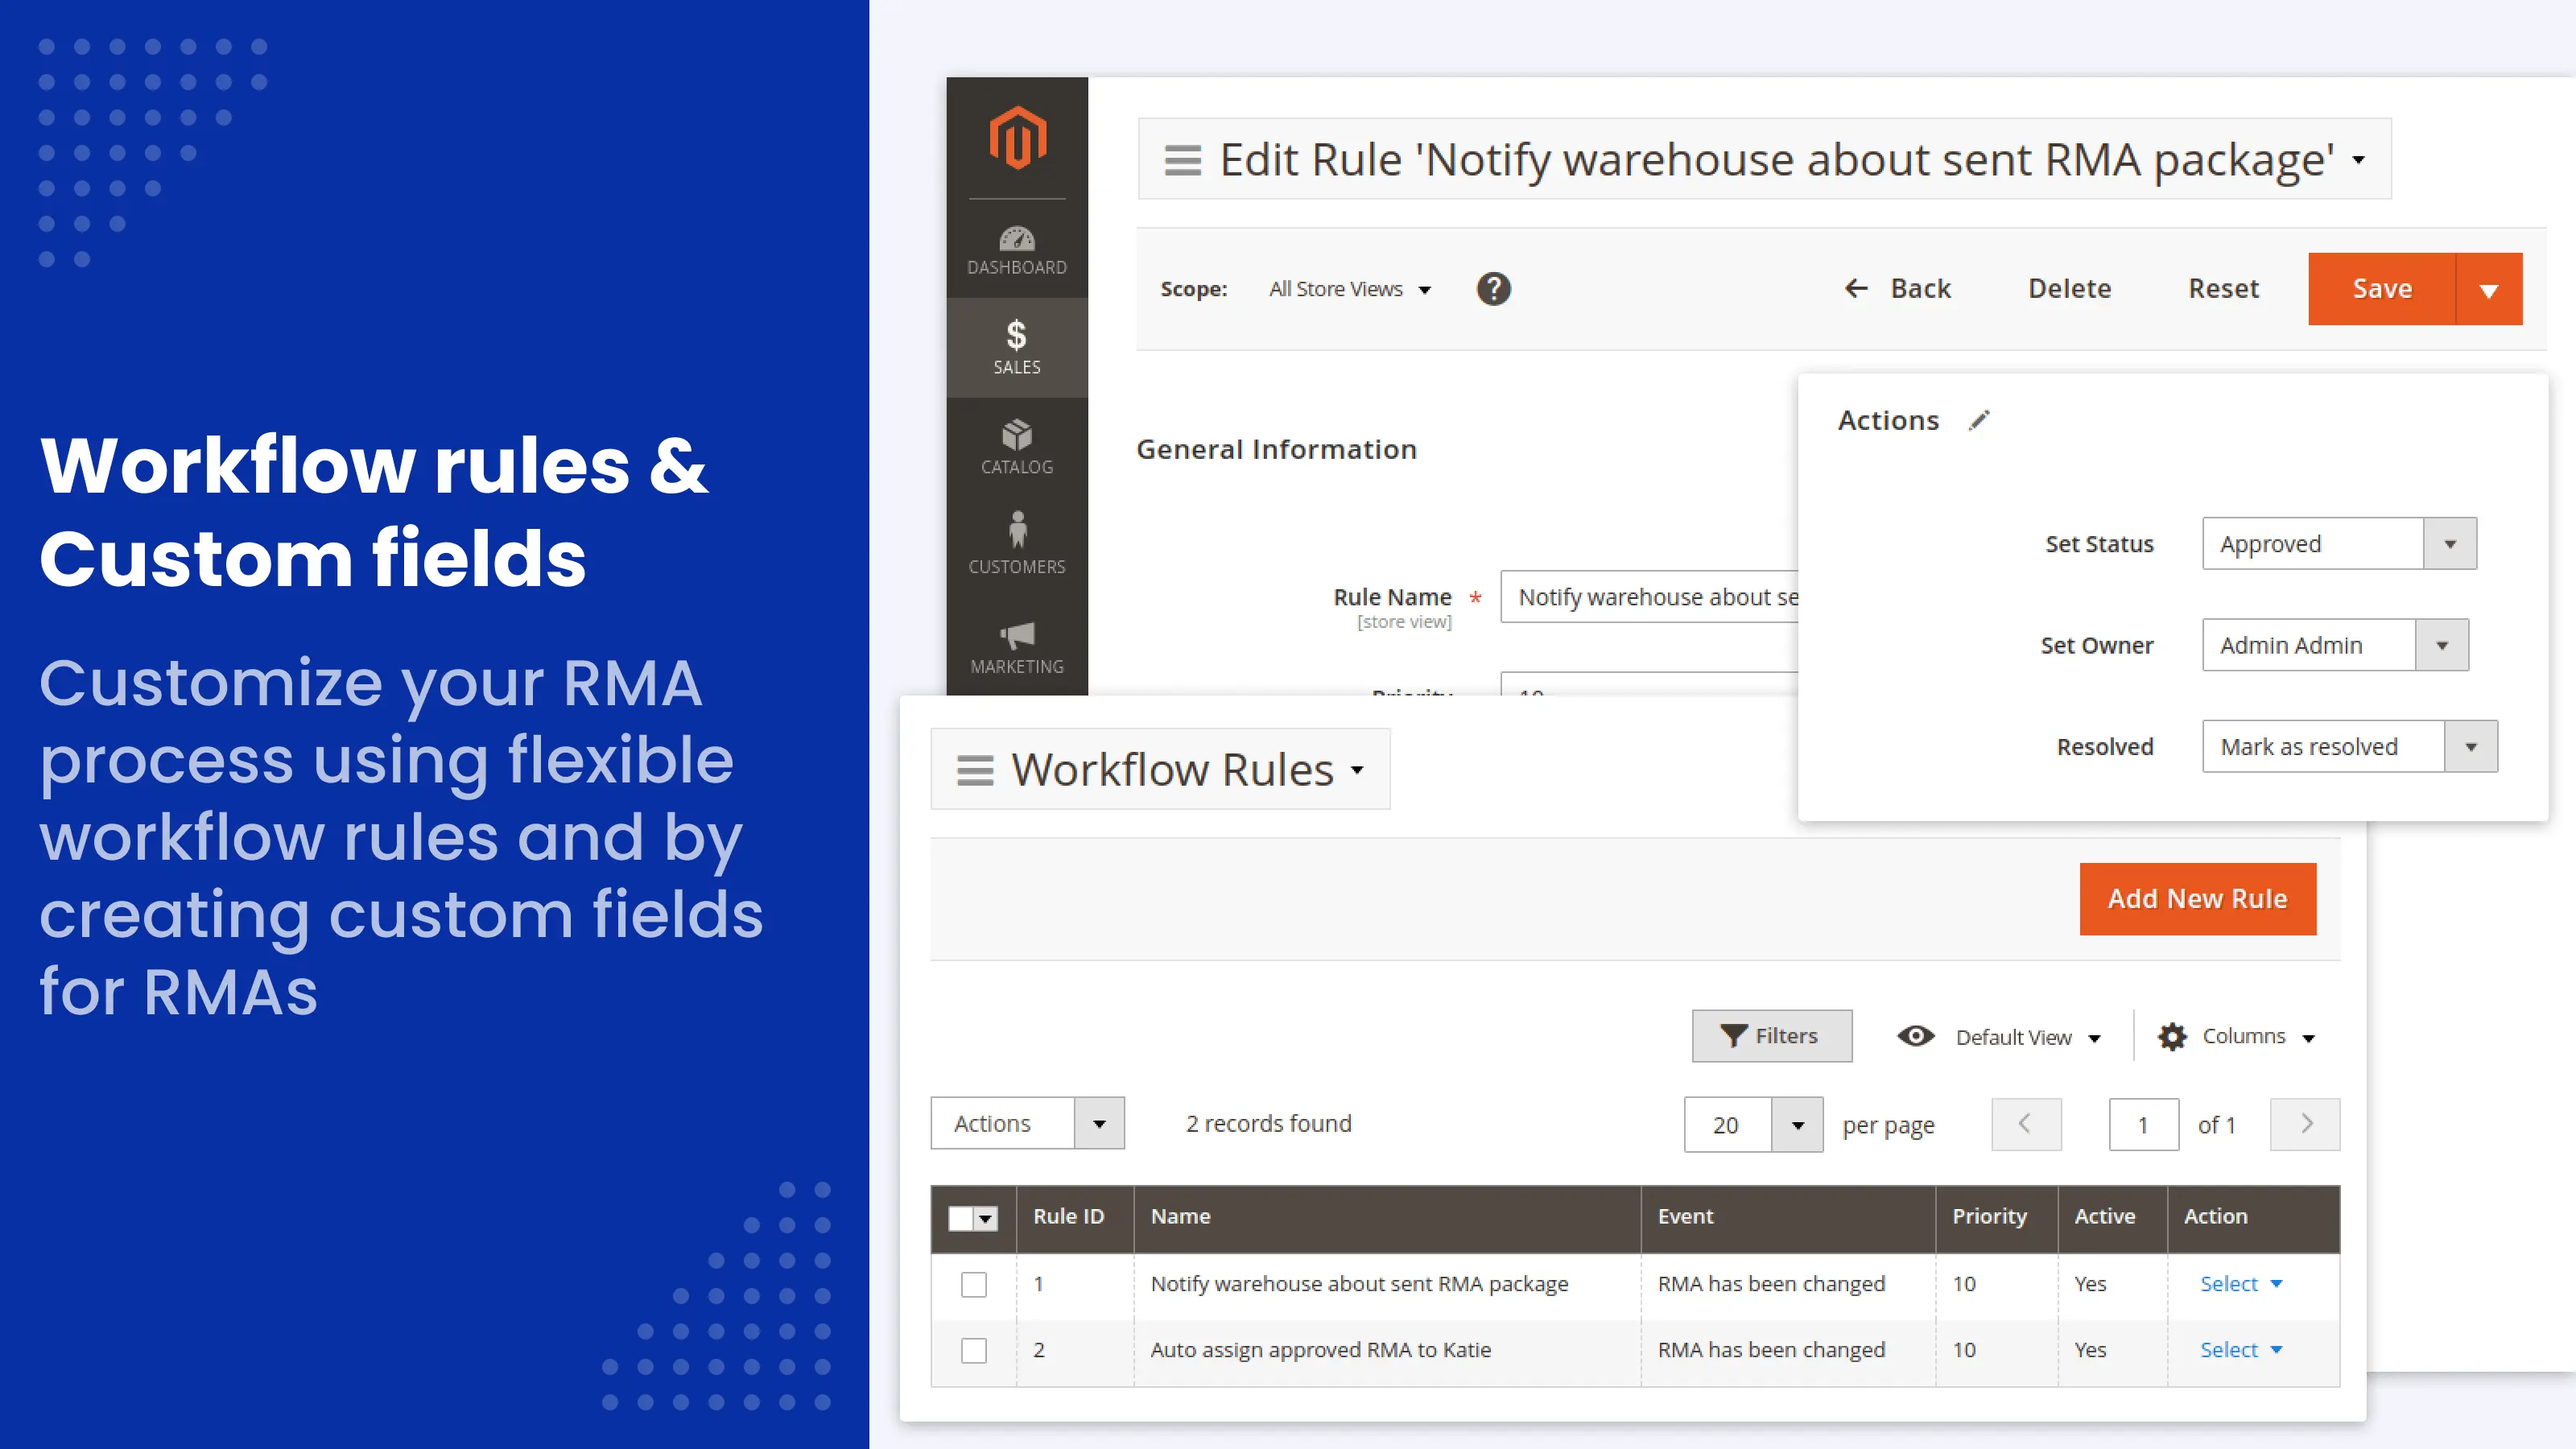 RMA Workflow rules and Custom fields